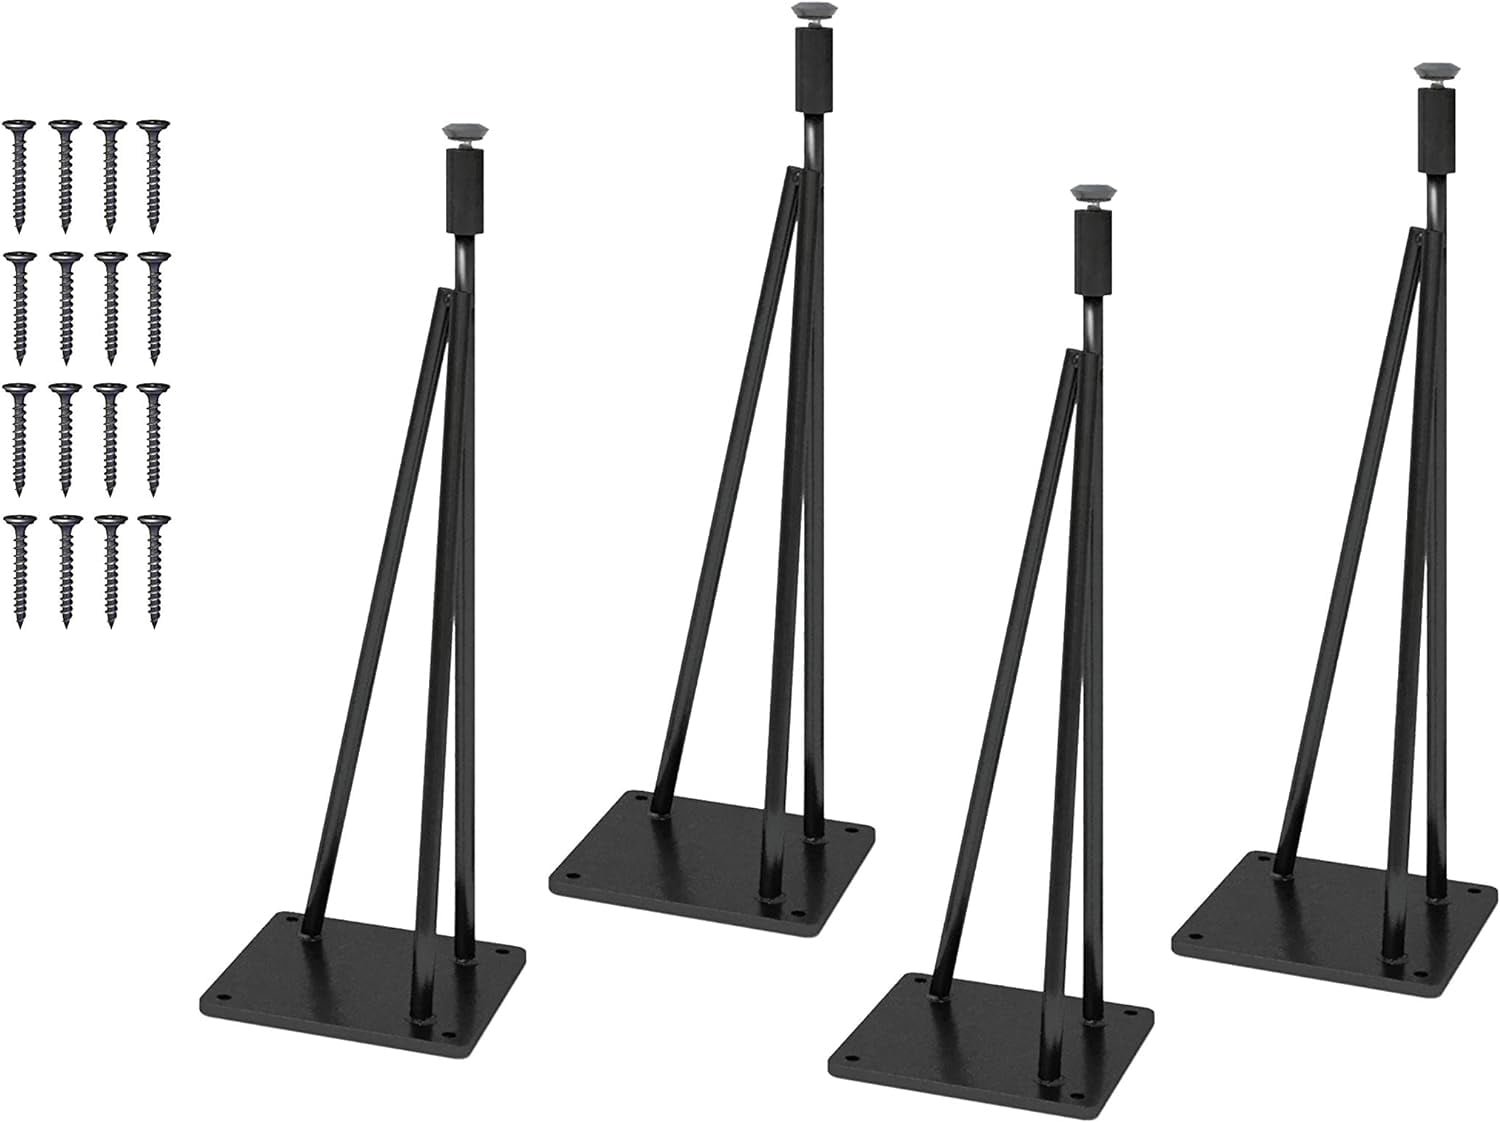 3-Rod Hairpin Table Legs w/Adjustable Feet, 4-Pack, Black - Rockler